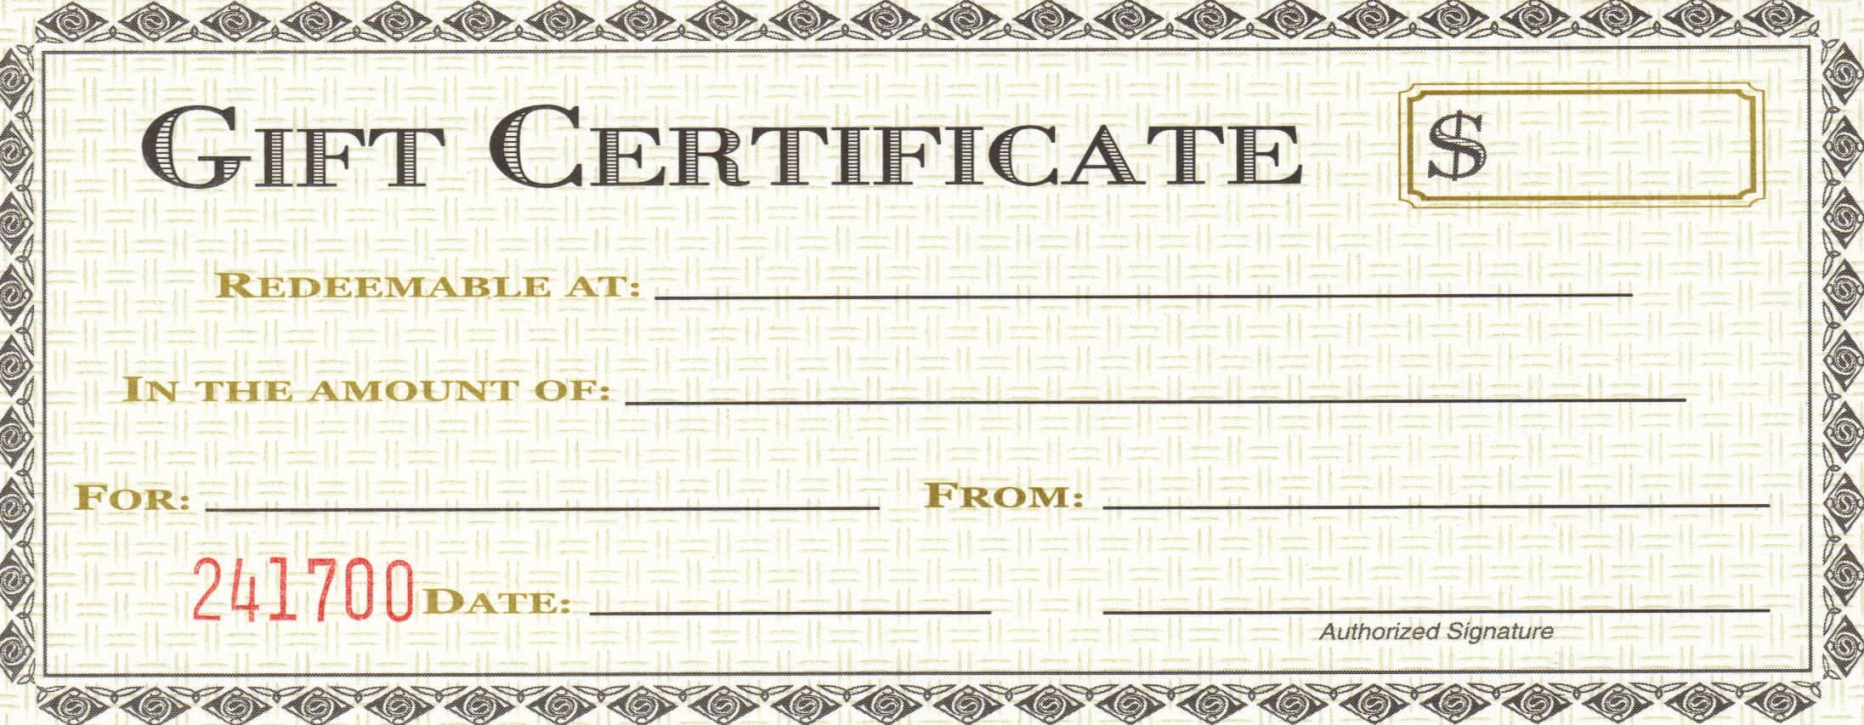 Fancy Gift Certificate Template